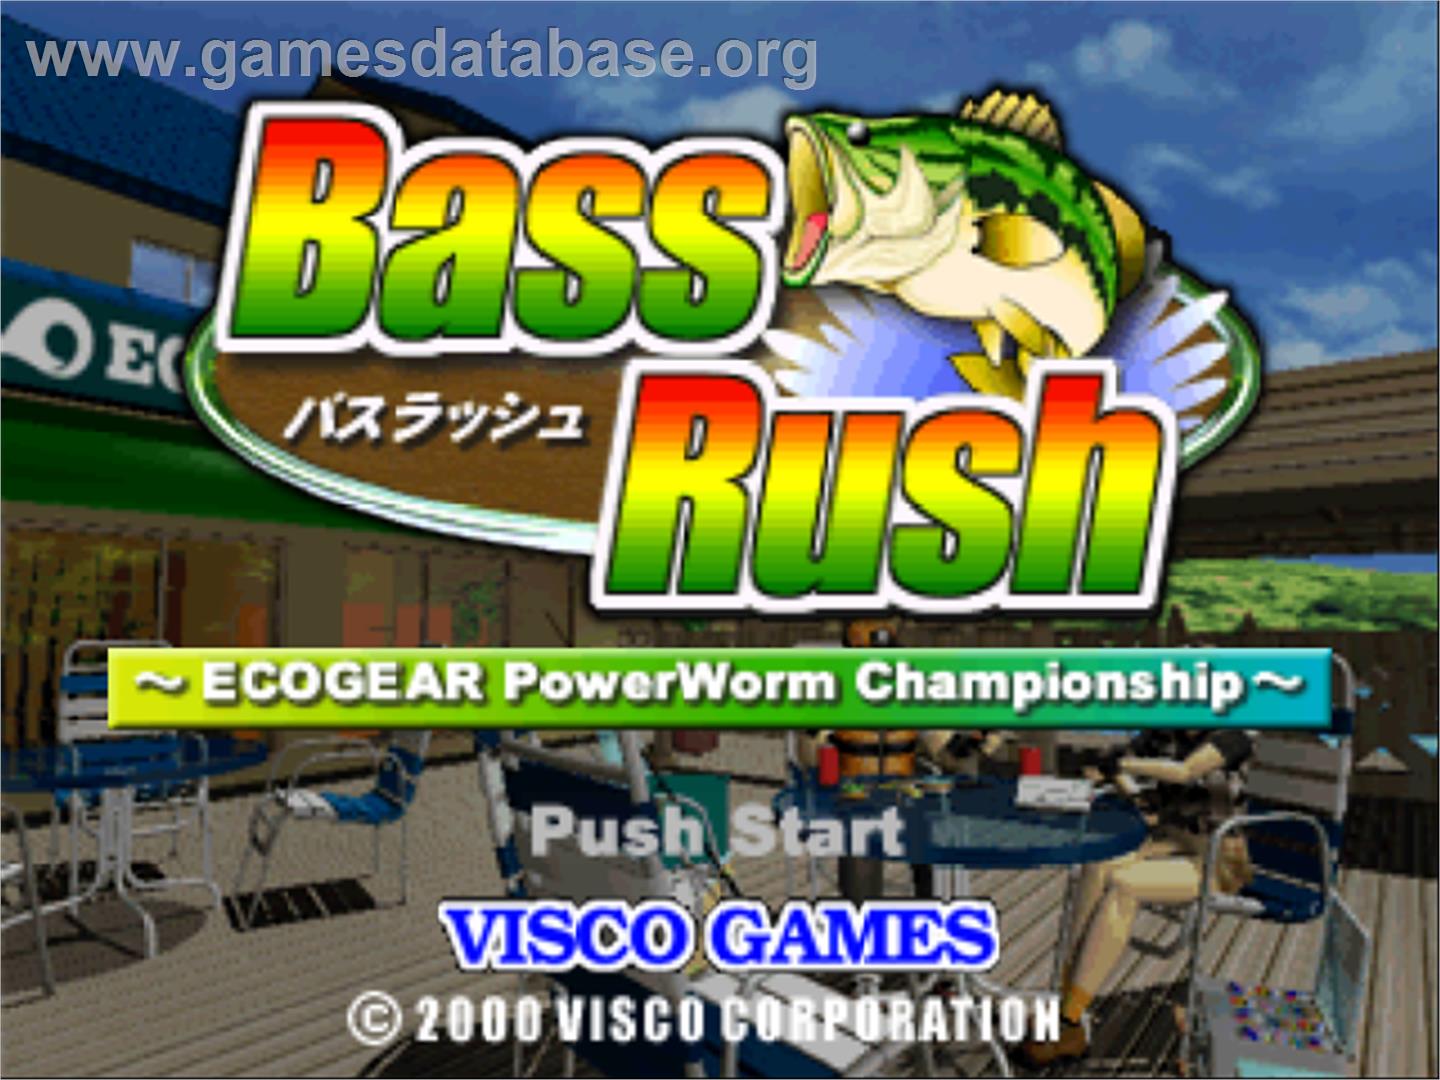 Bass Rush: ECOGEAR PowerWorm Championship - Nintendo N64 - Artwork - Title Screen